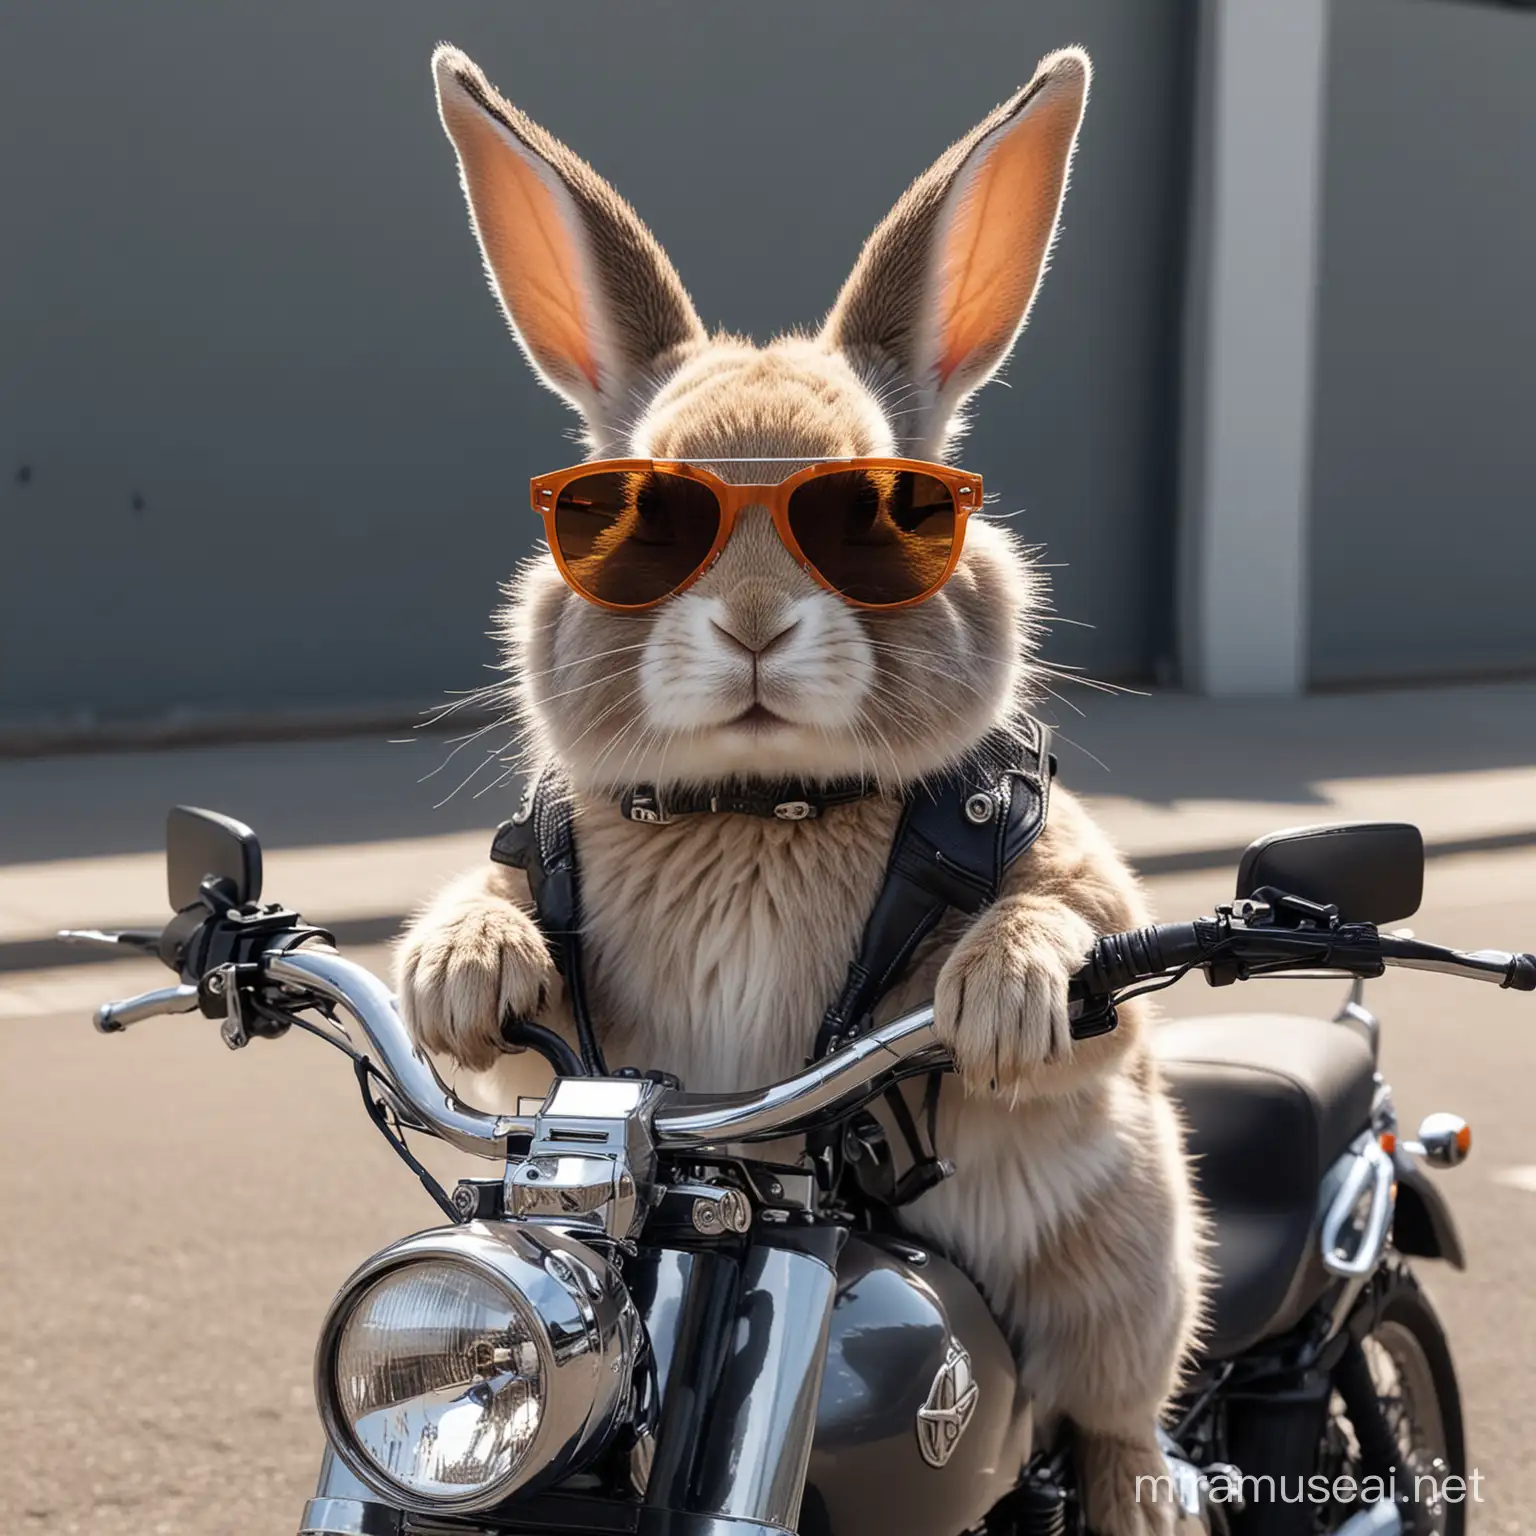 RetroStyle Rabbit Riding a Modern Motorbike